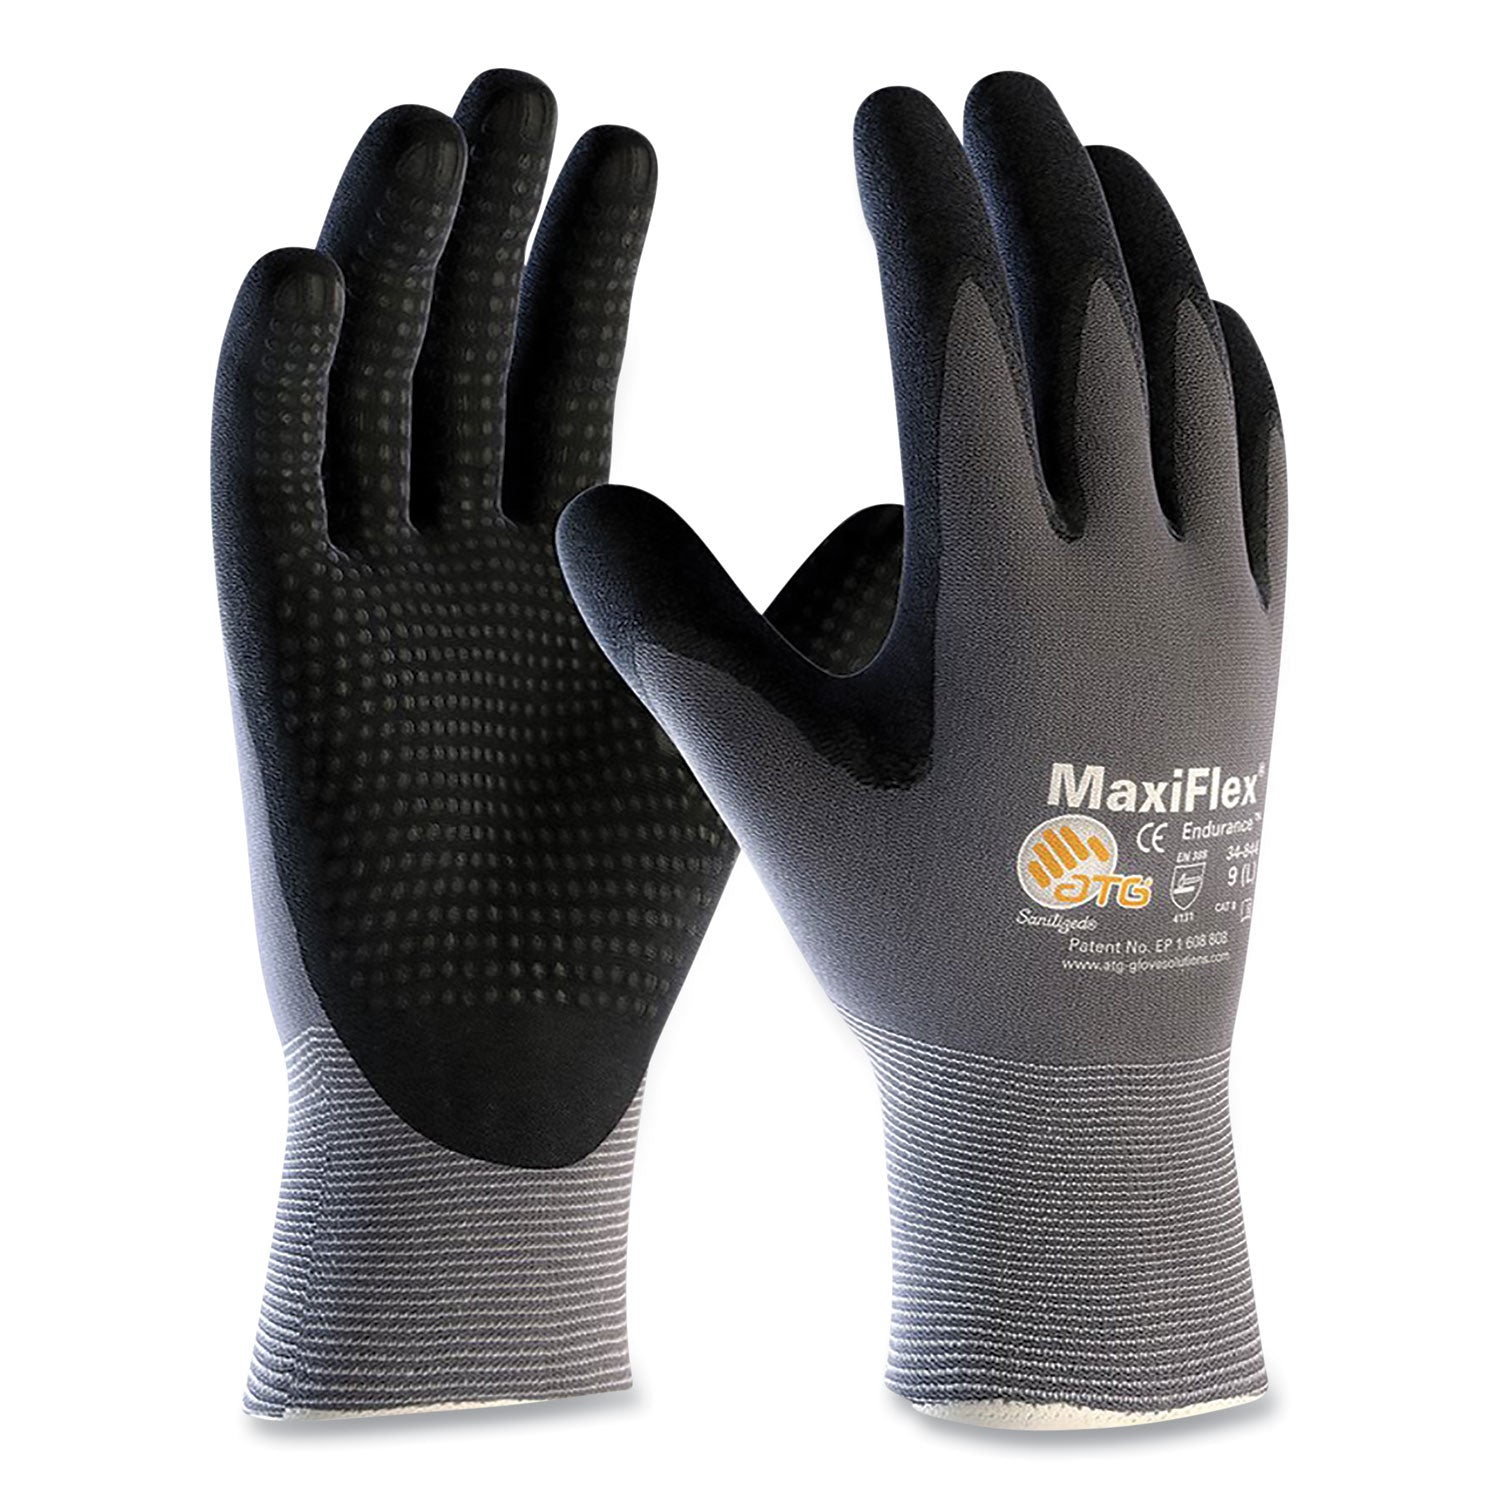 Endurance Seamless Knit Nylon Gloves, Large (Size 9), Gray/Black, 12 Pairs - 2